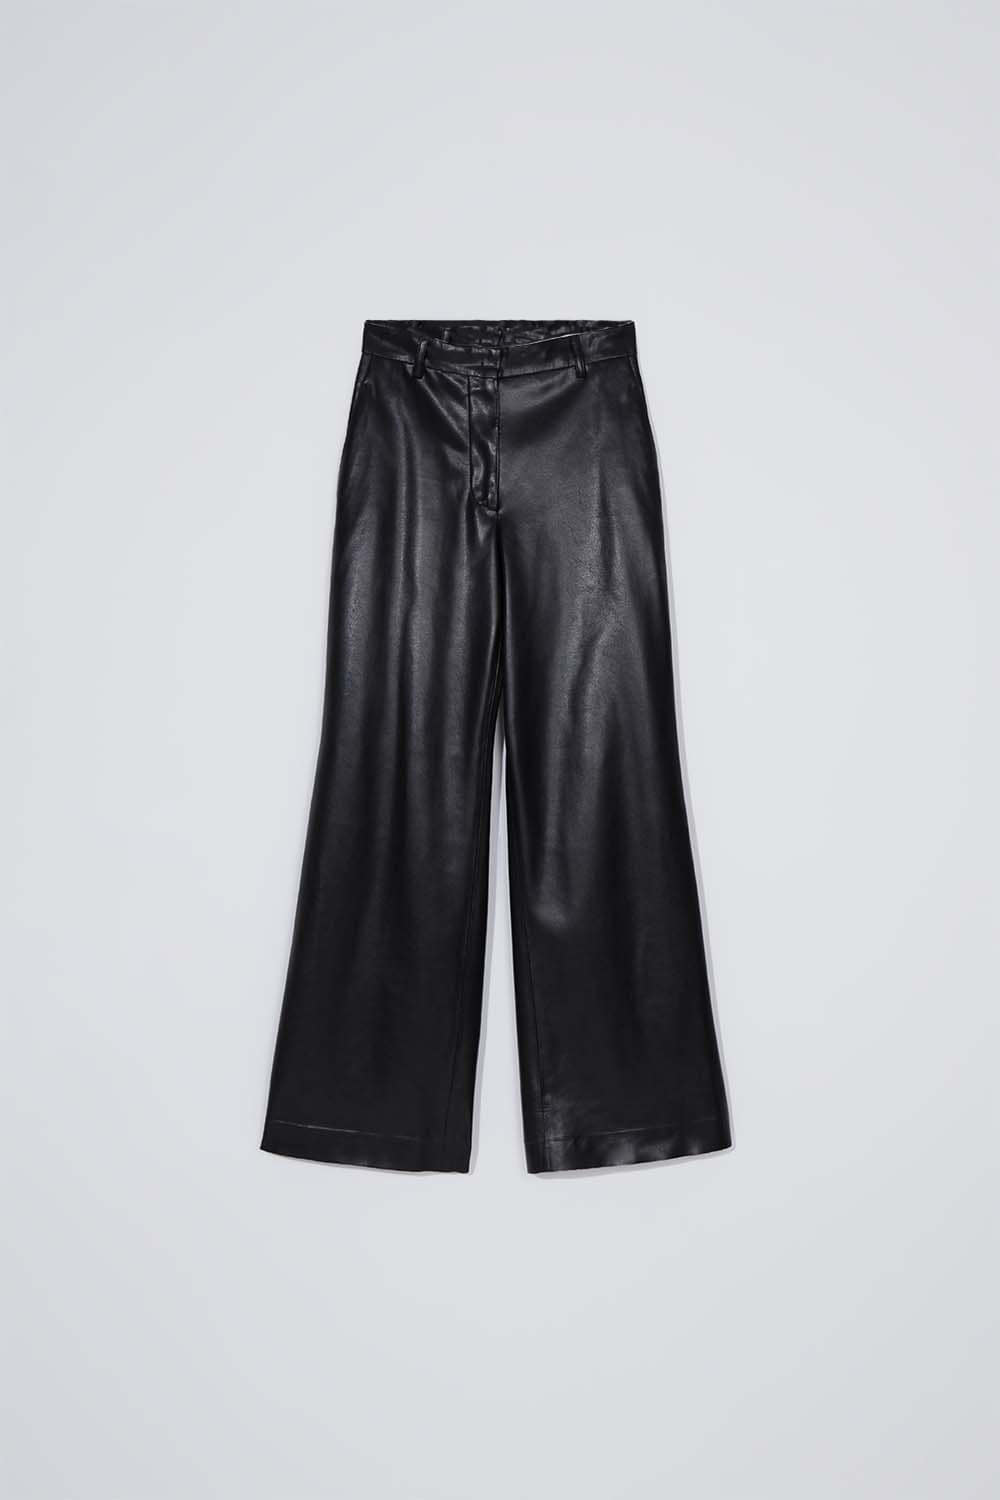 Straight pants(leather)_black